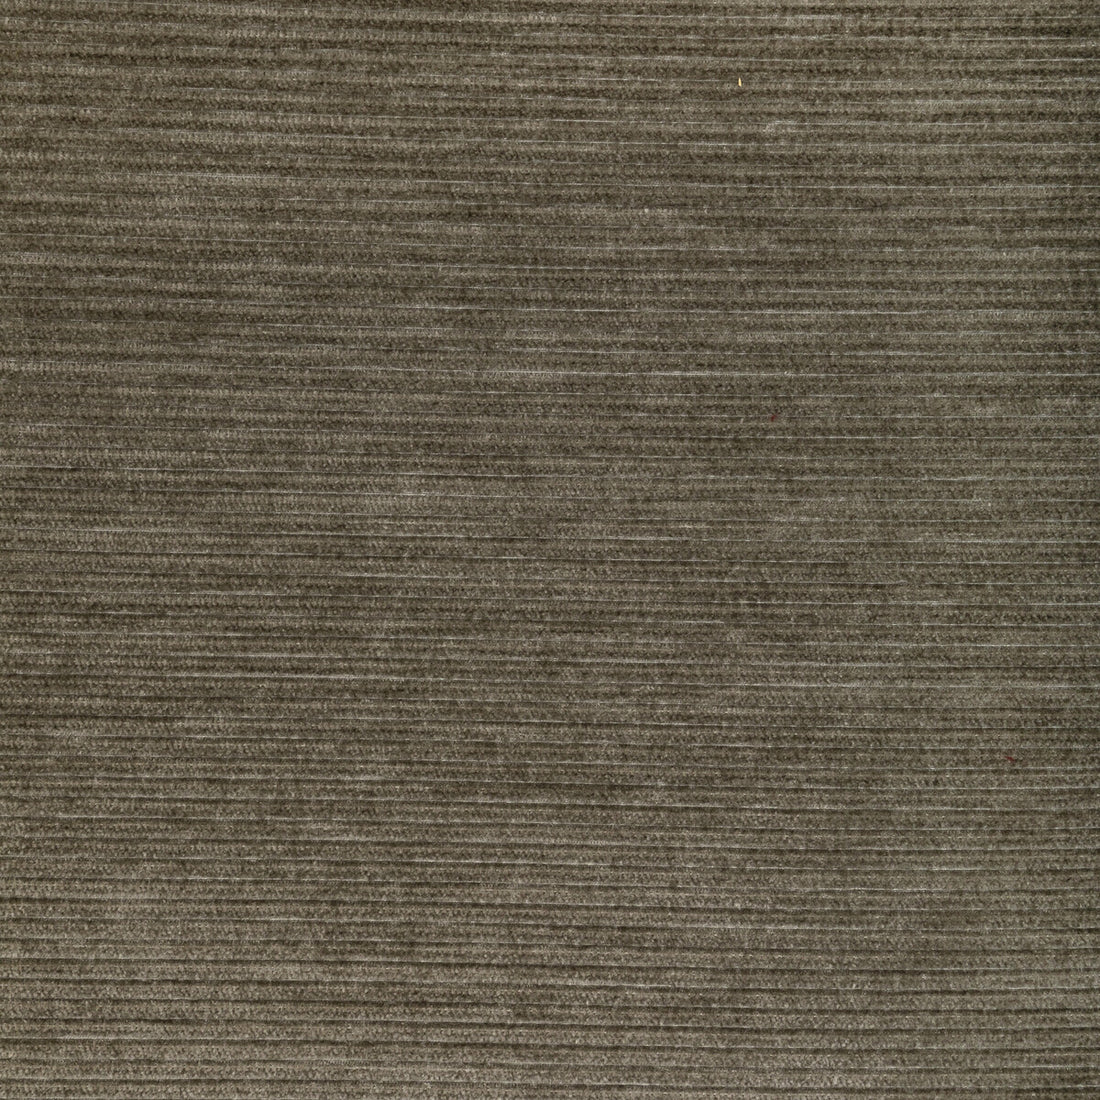 Kravet Smart fabric in 36651-106 color - pattern 36651.106.0 - by Kravet Smart in the Performance Kravetarmor collection